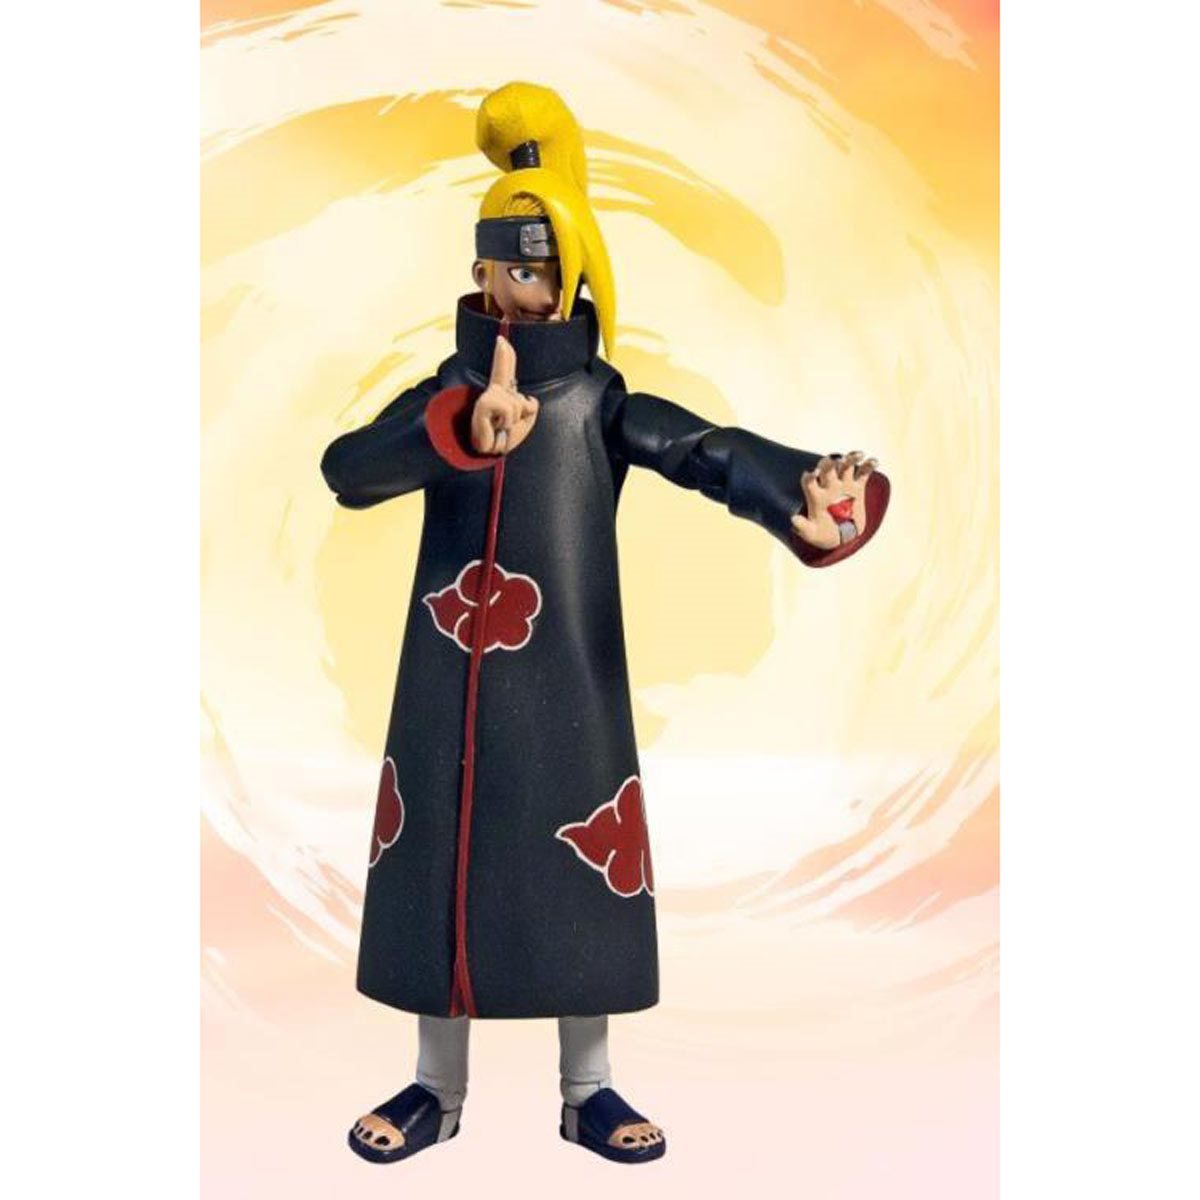 Naruto: Shippuden 4-Inch Poseable Action Figure Encore Series Case